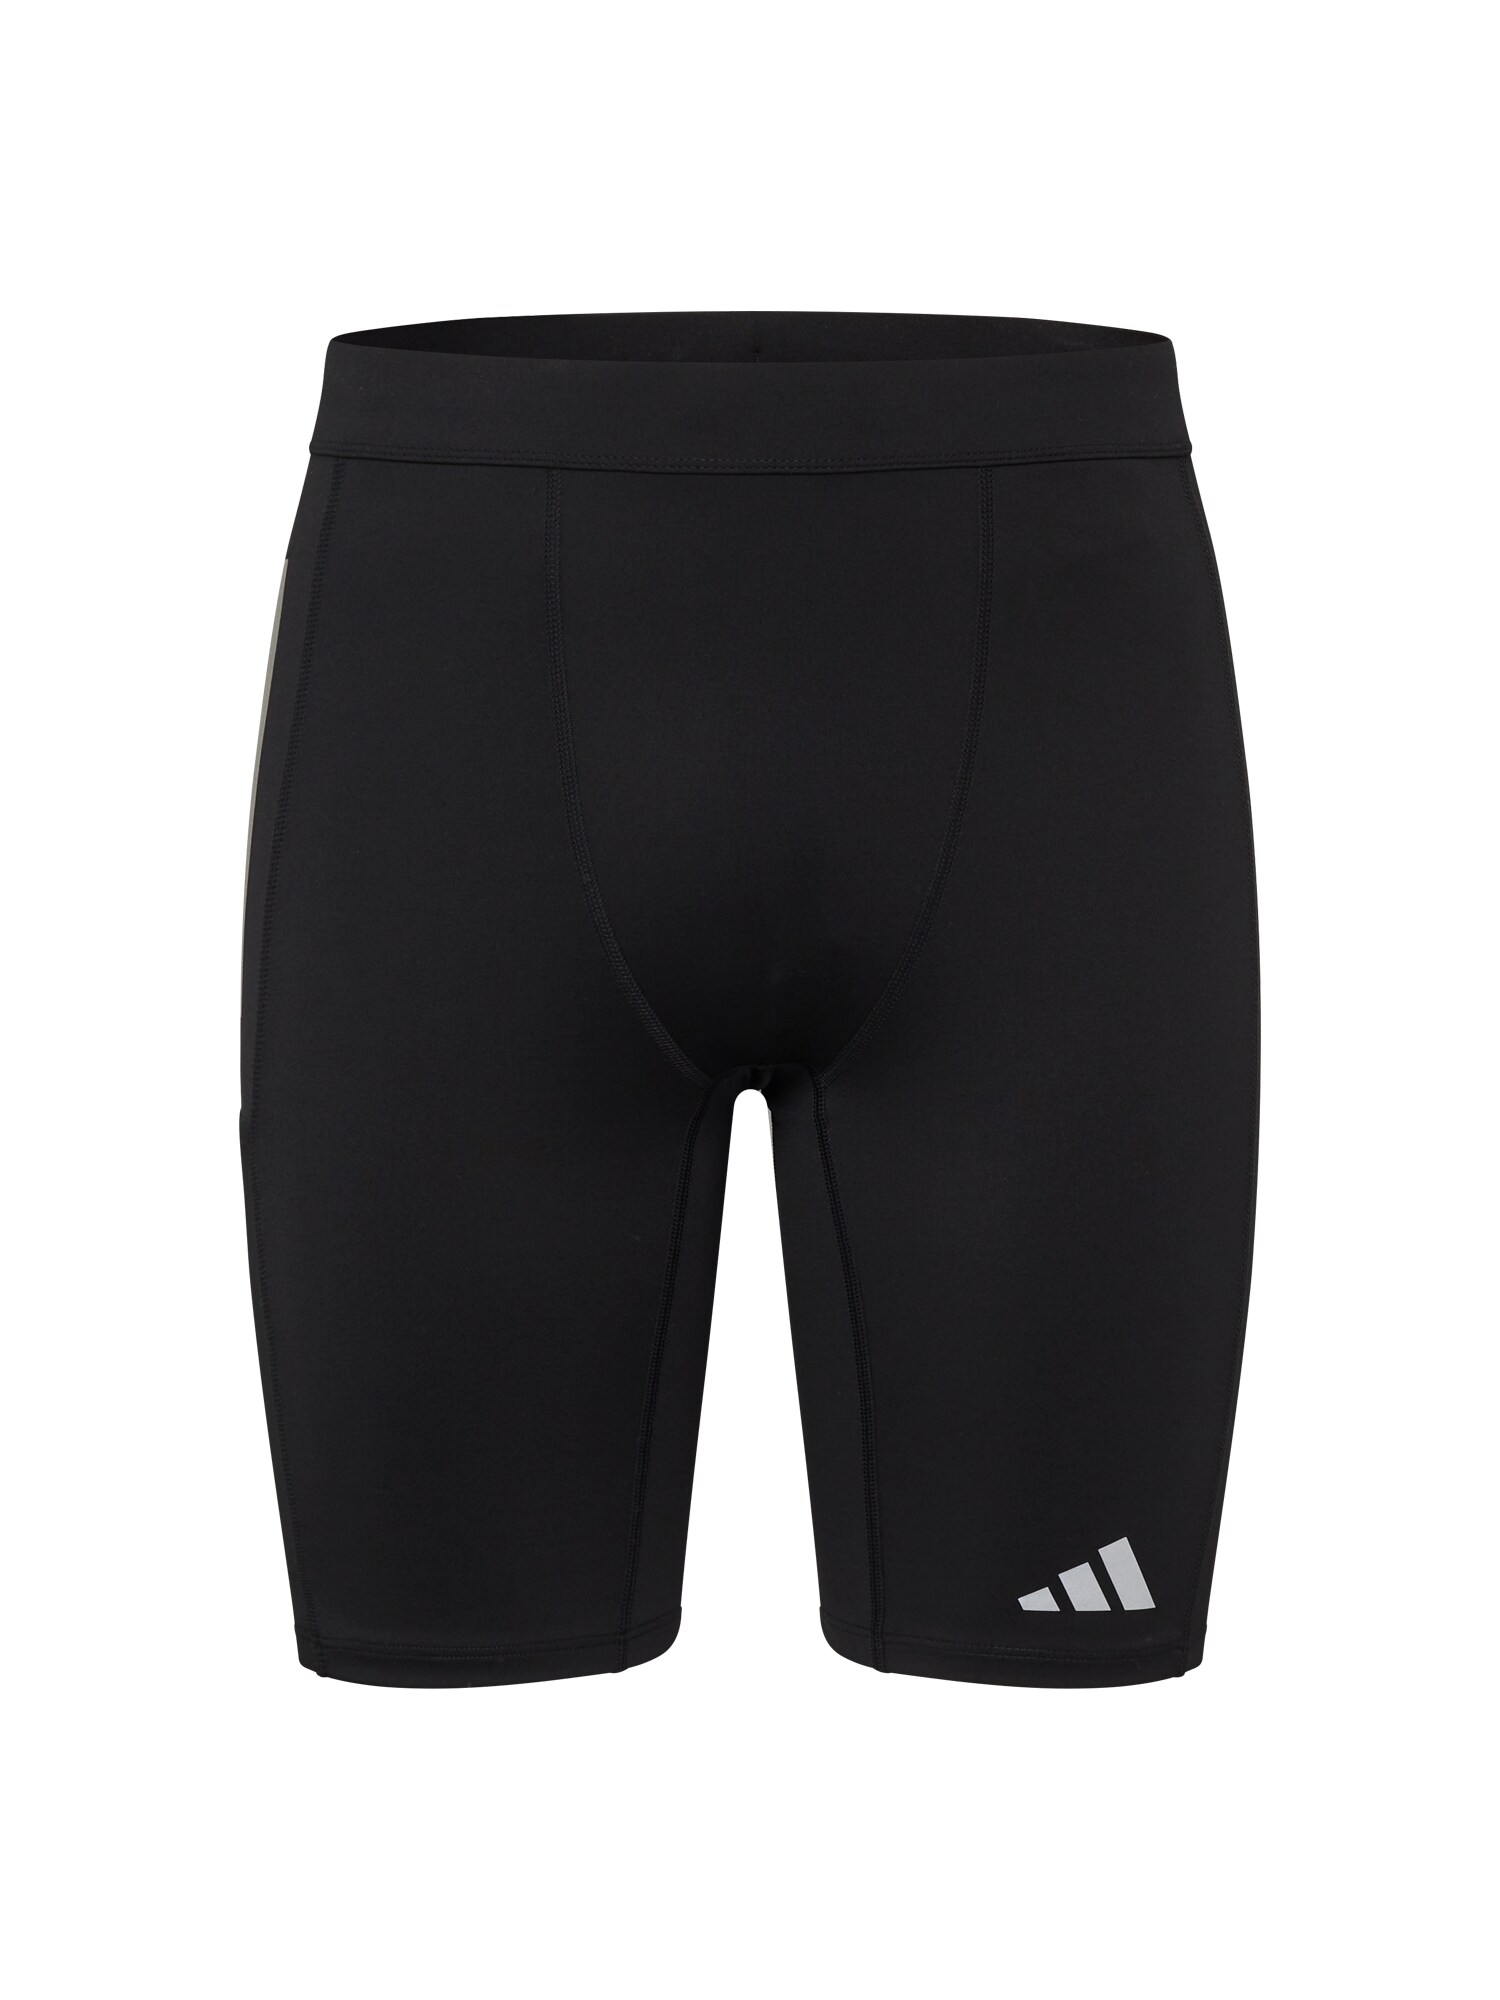 ADIDAS PERFORMANCE Športne hlače  svetlo siva / črna / bela